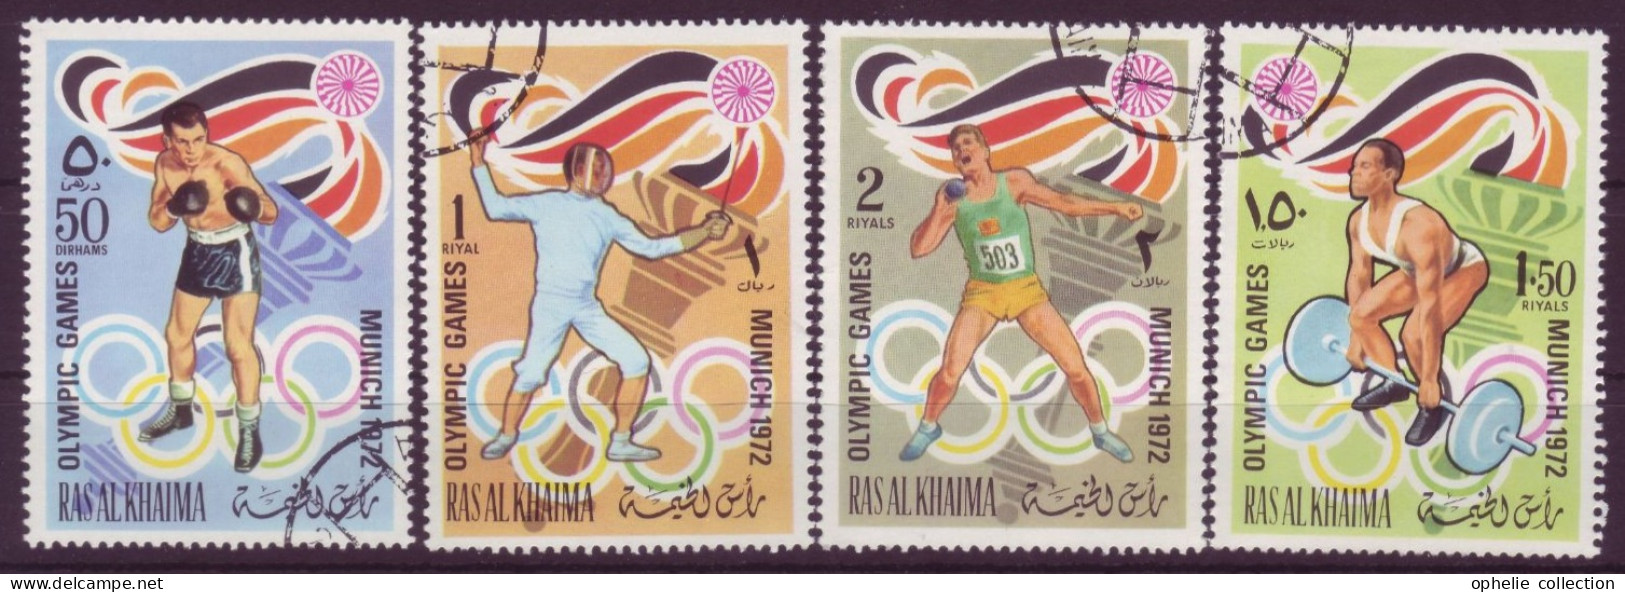 Asie - Ras-el-Khaima - Munich 72 Olympic Games - 5 Timbres Différents - 7029 - Ras Al-Khaimah